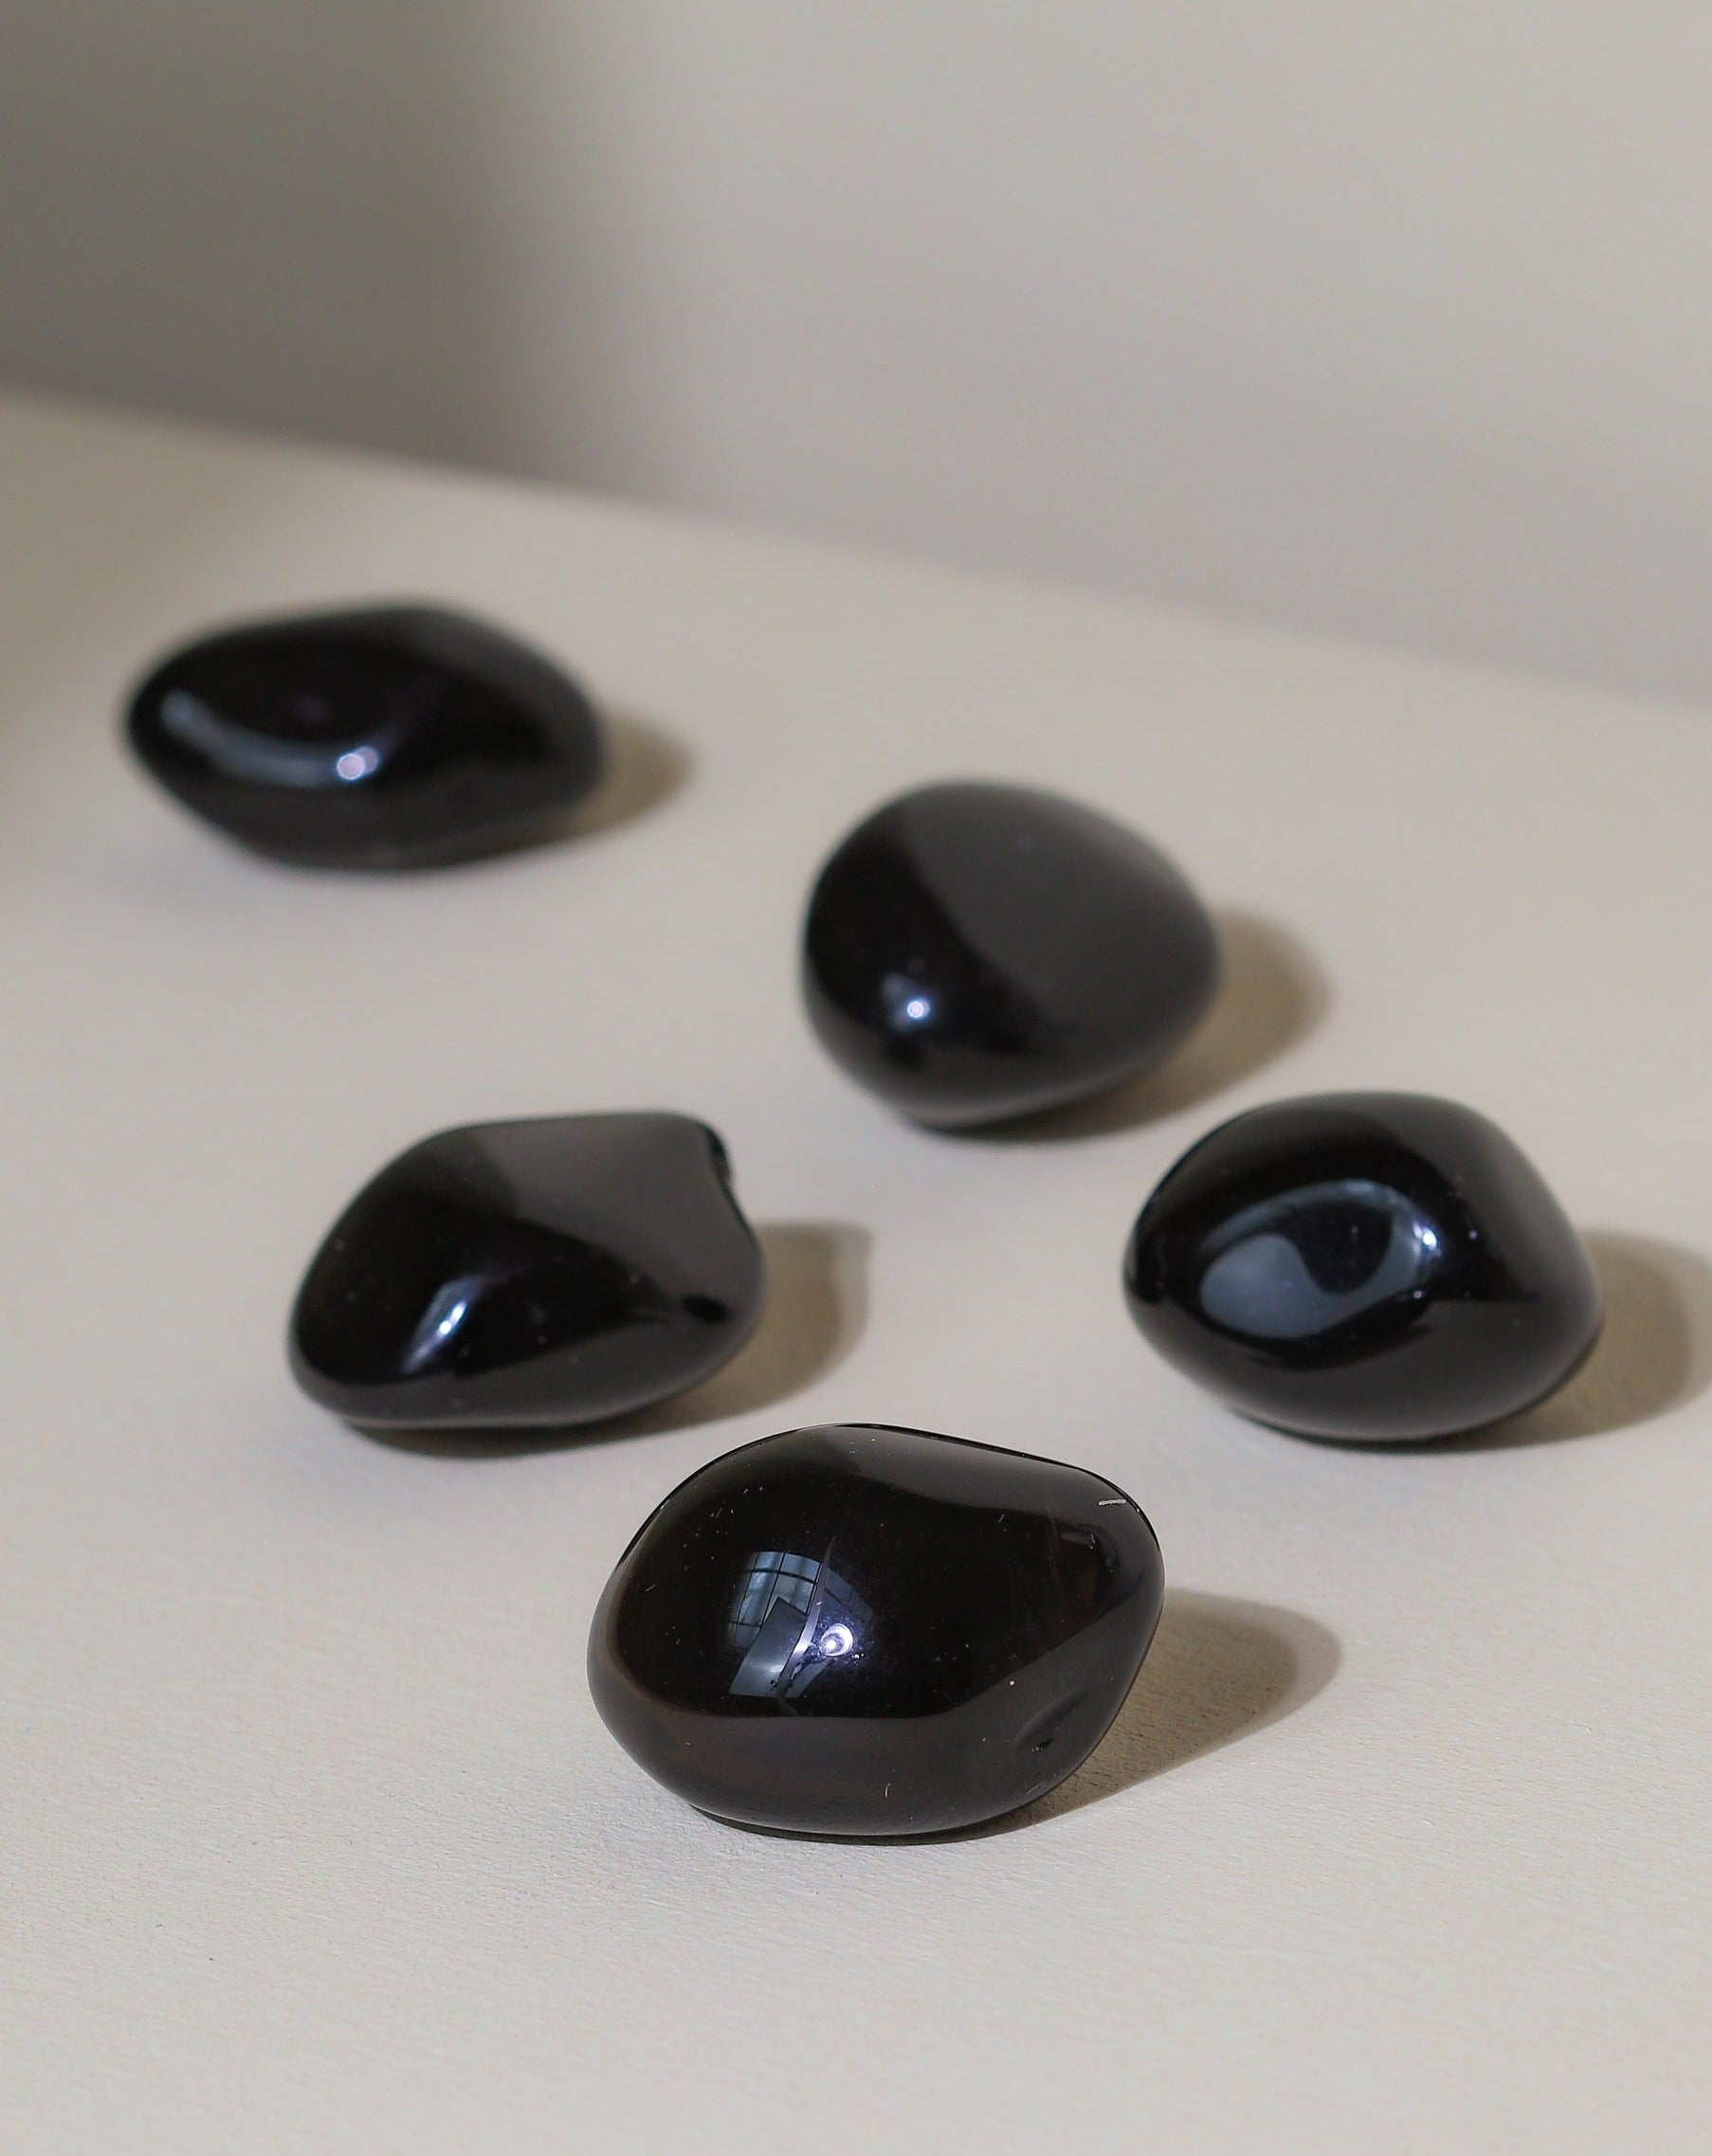 Obsidian tumbled stone